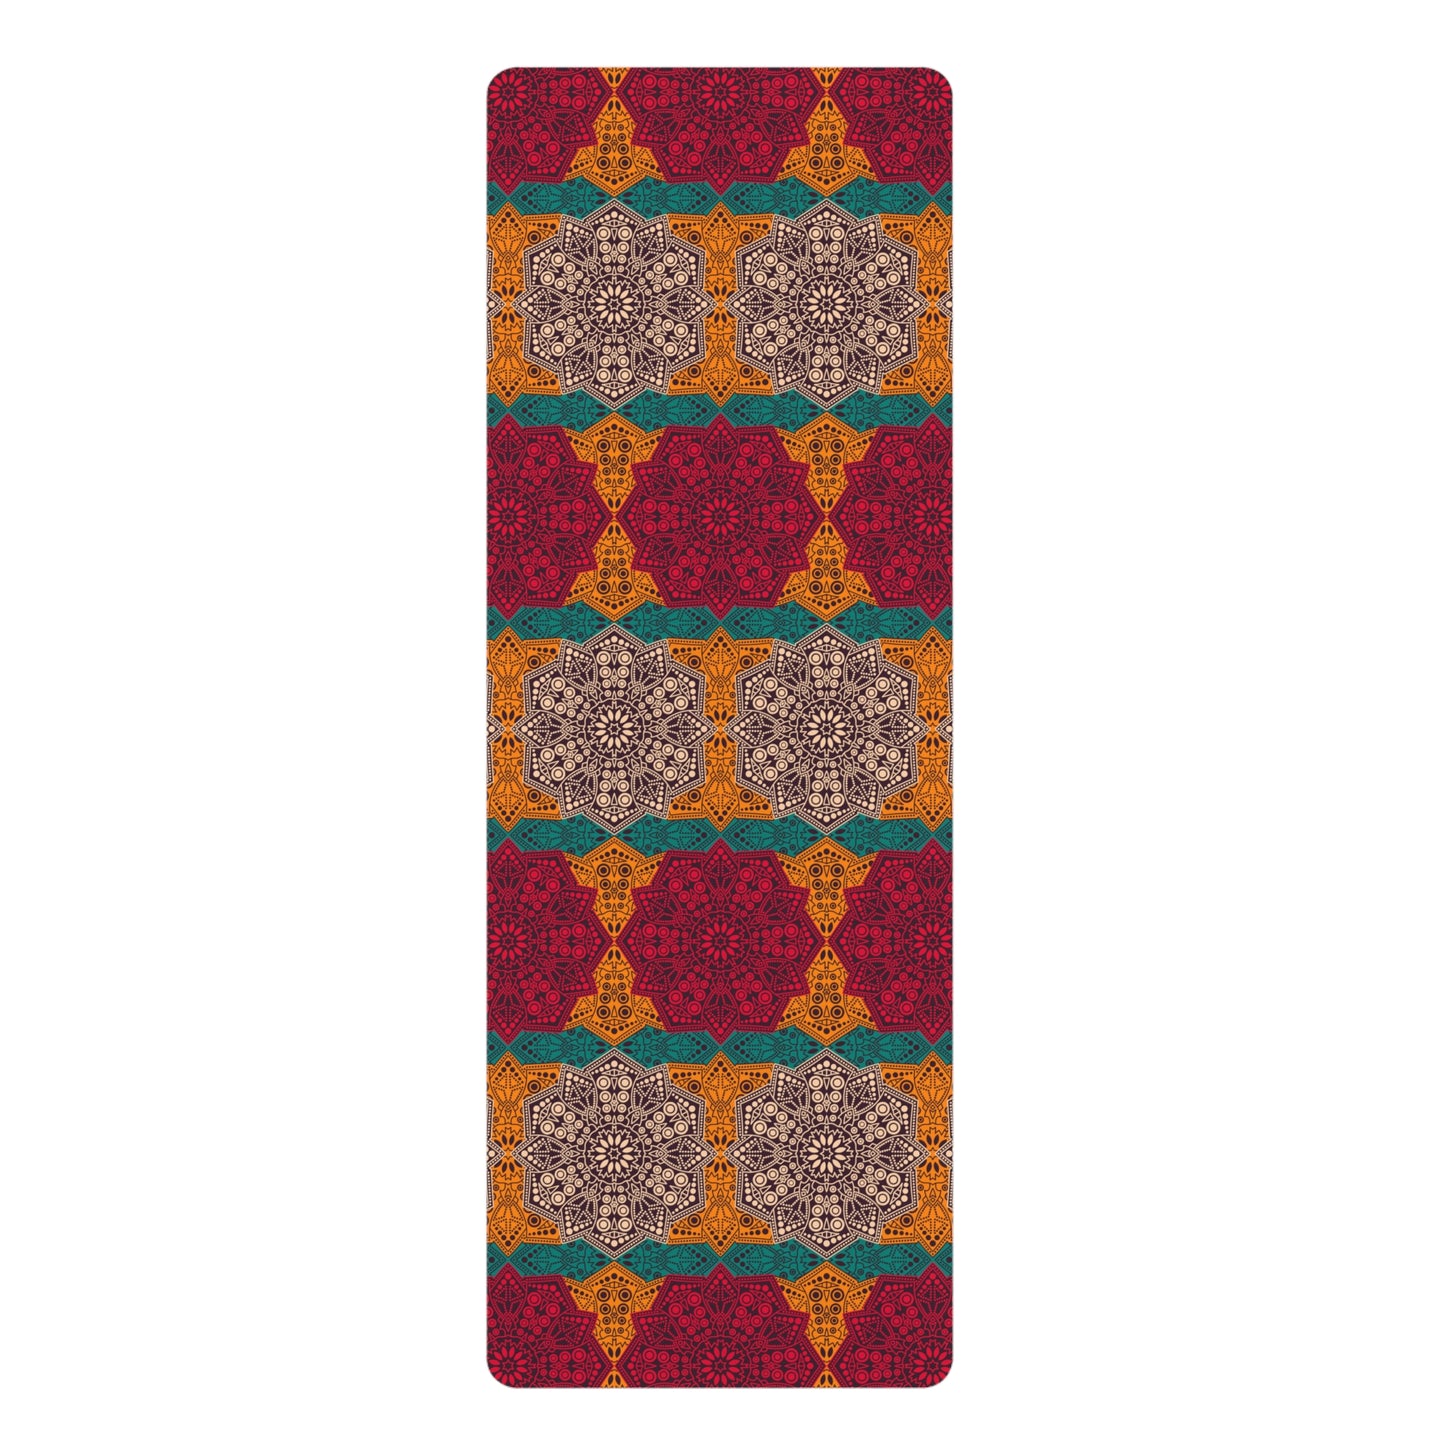 Niccie Mandala Pattern Rubber Yoga Mat Edition for Enhanced